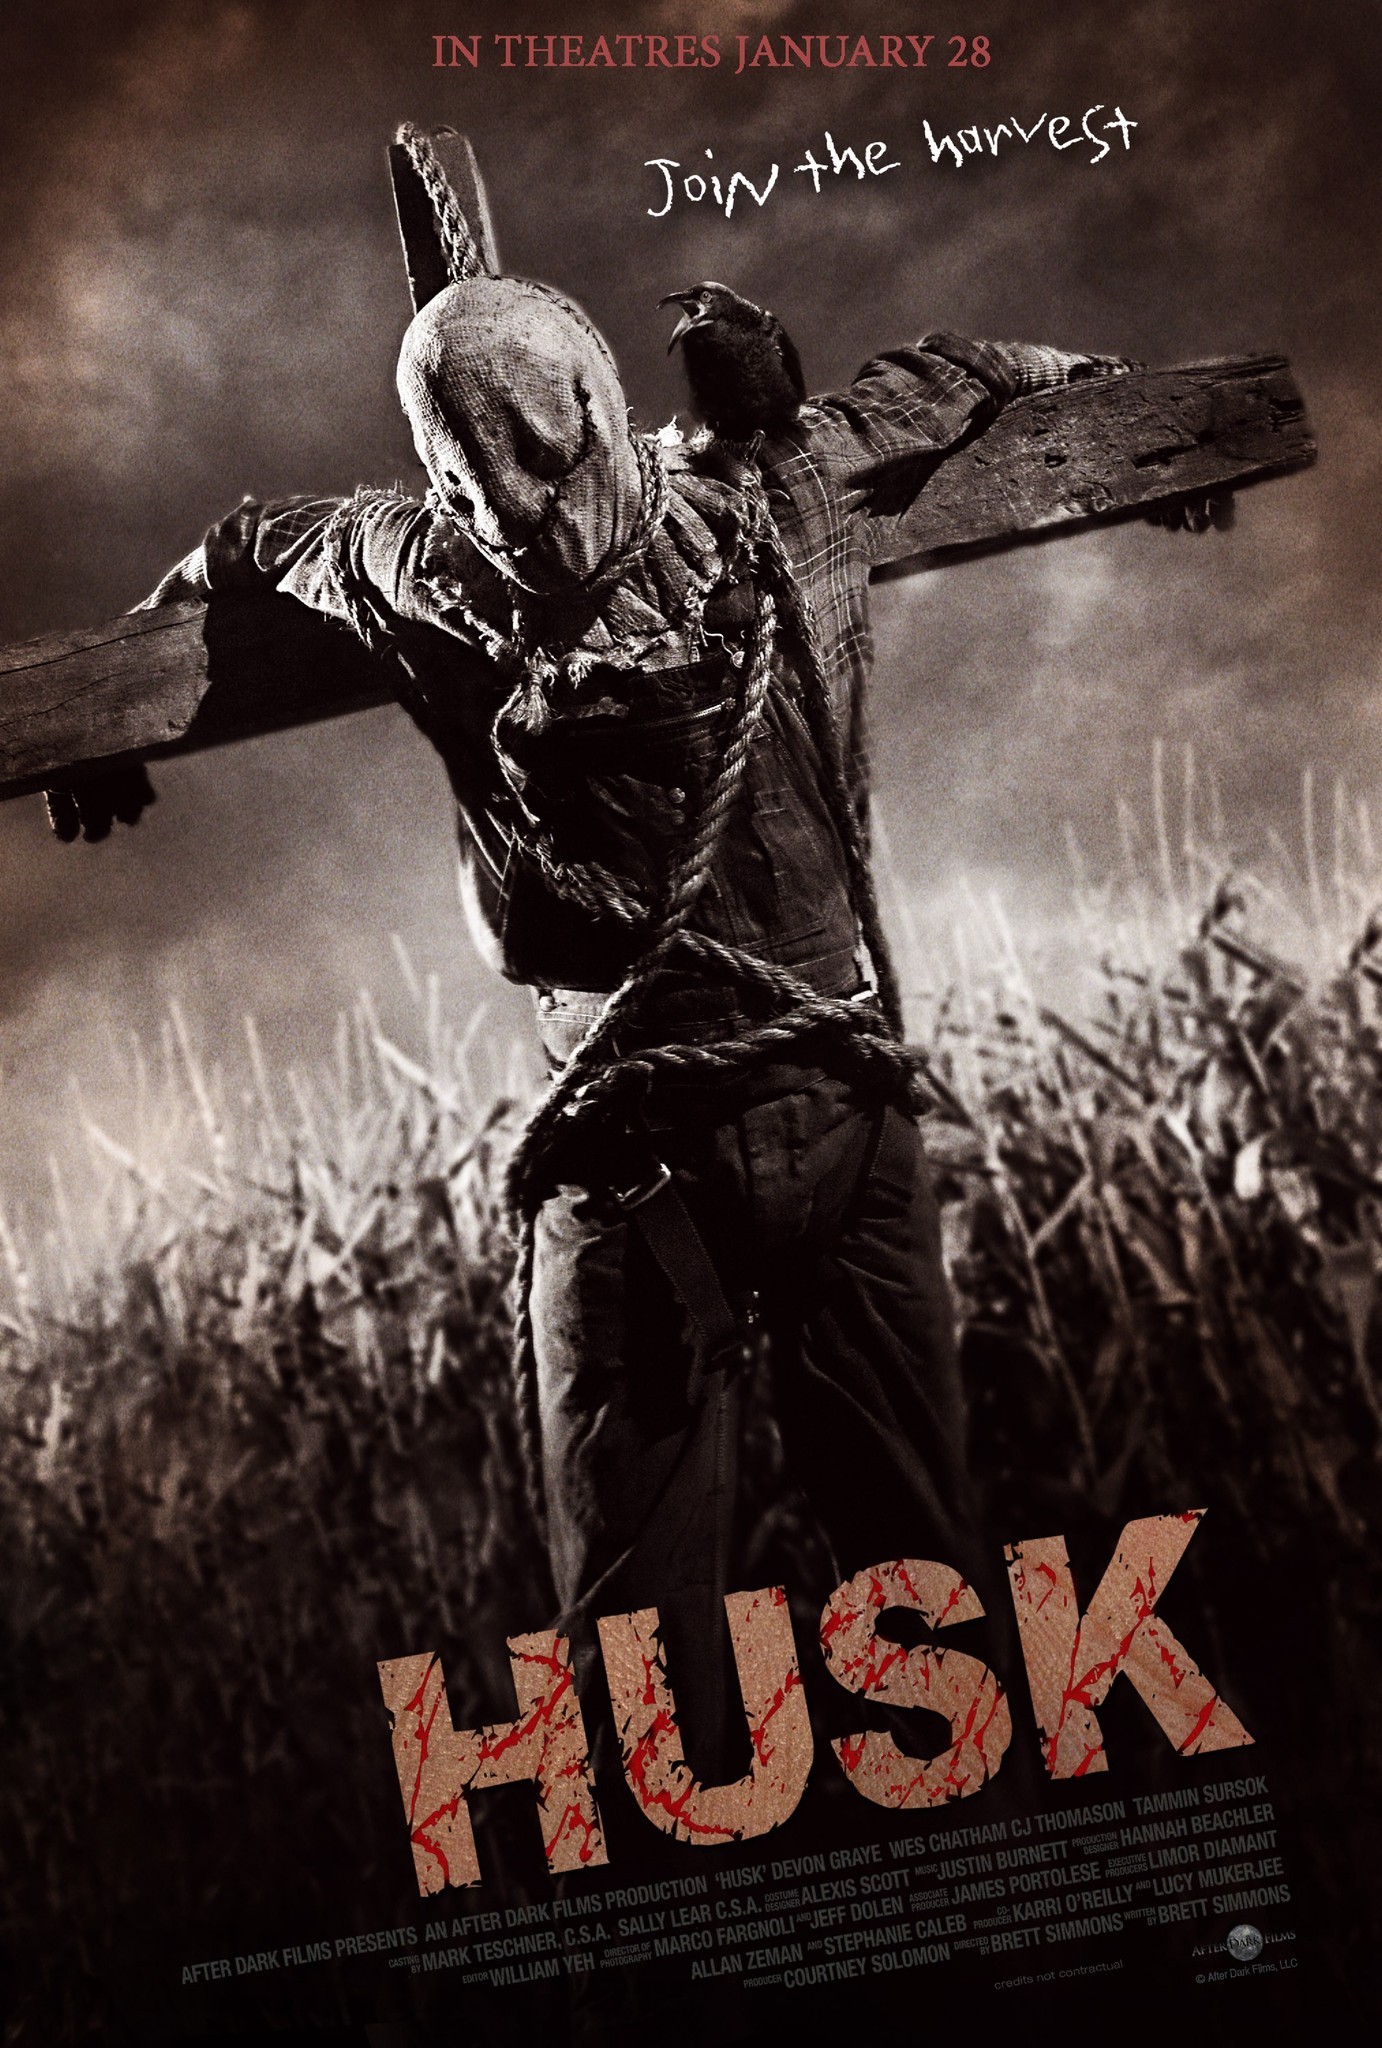 Husk (2011) ไร่ข้าวโพดโหดจิตหลอน